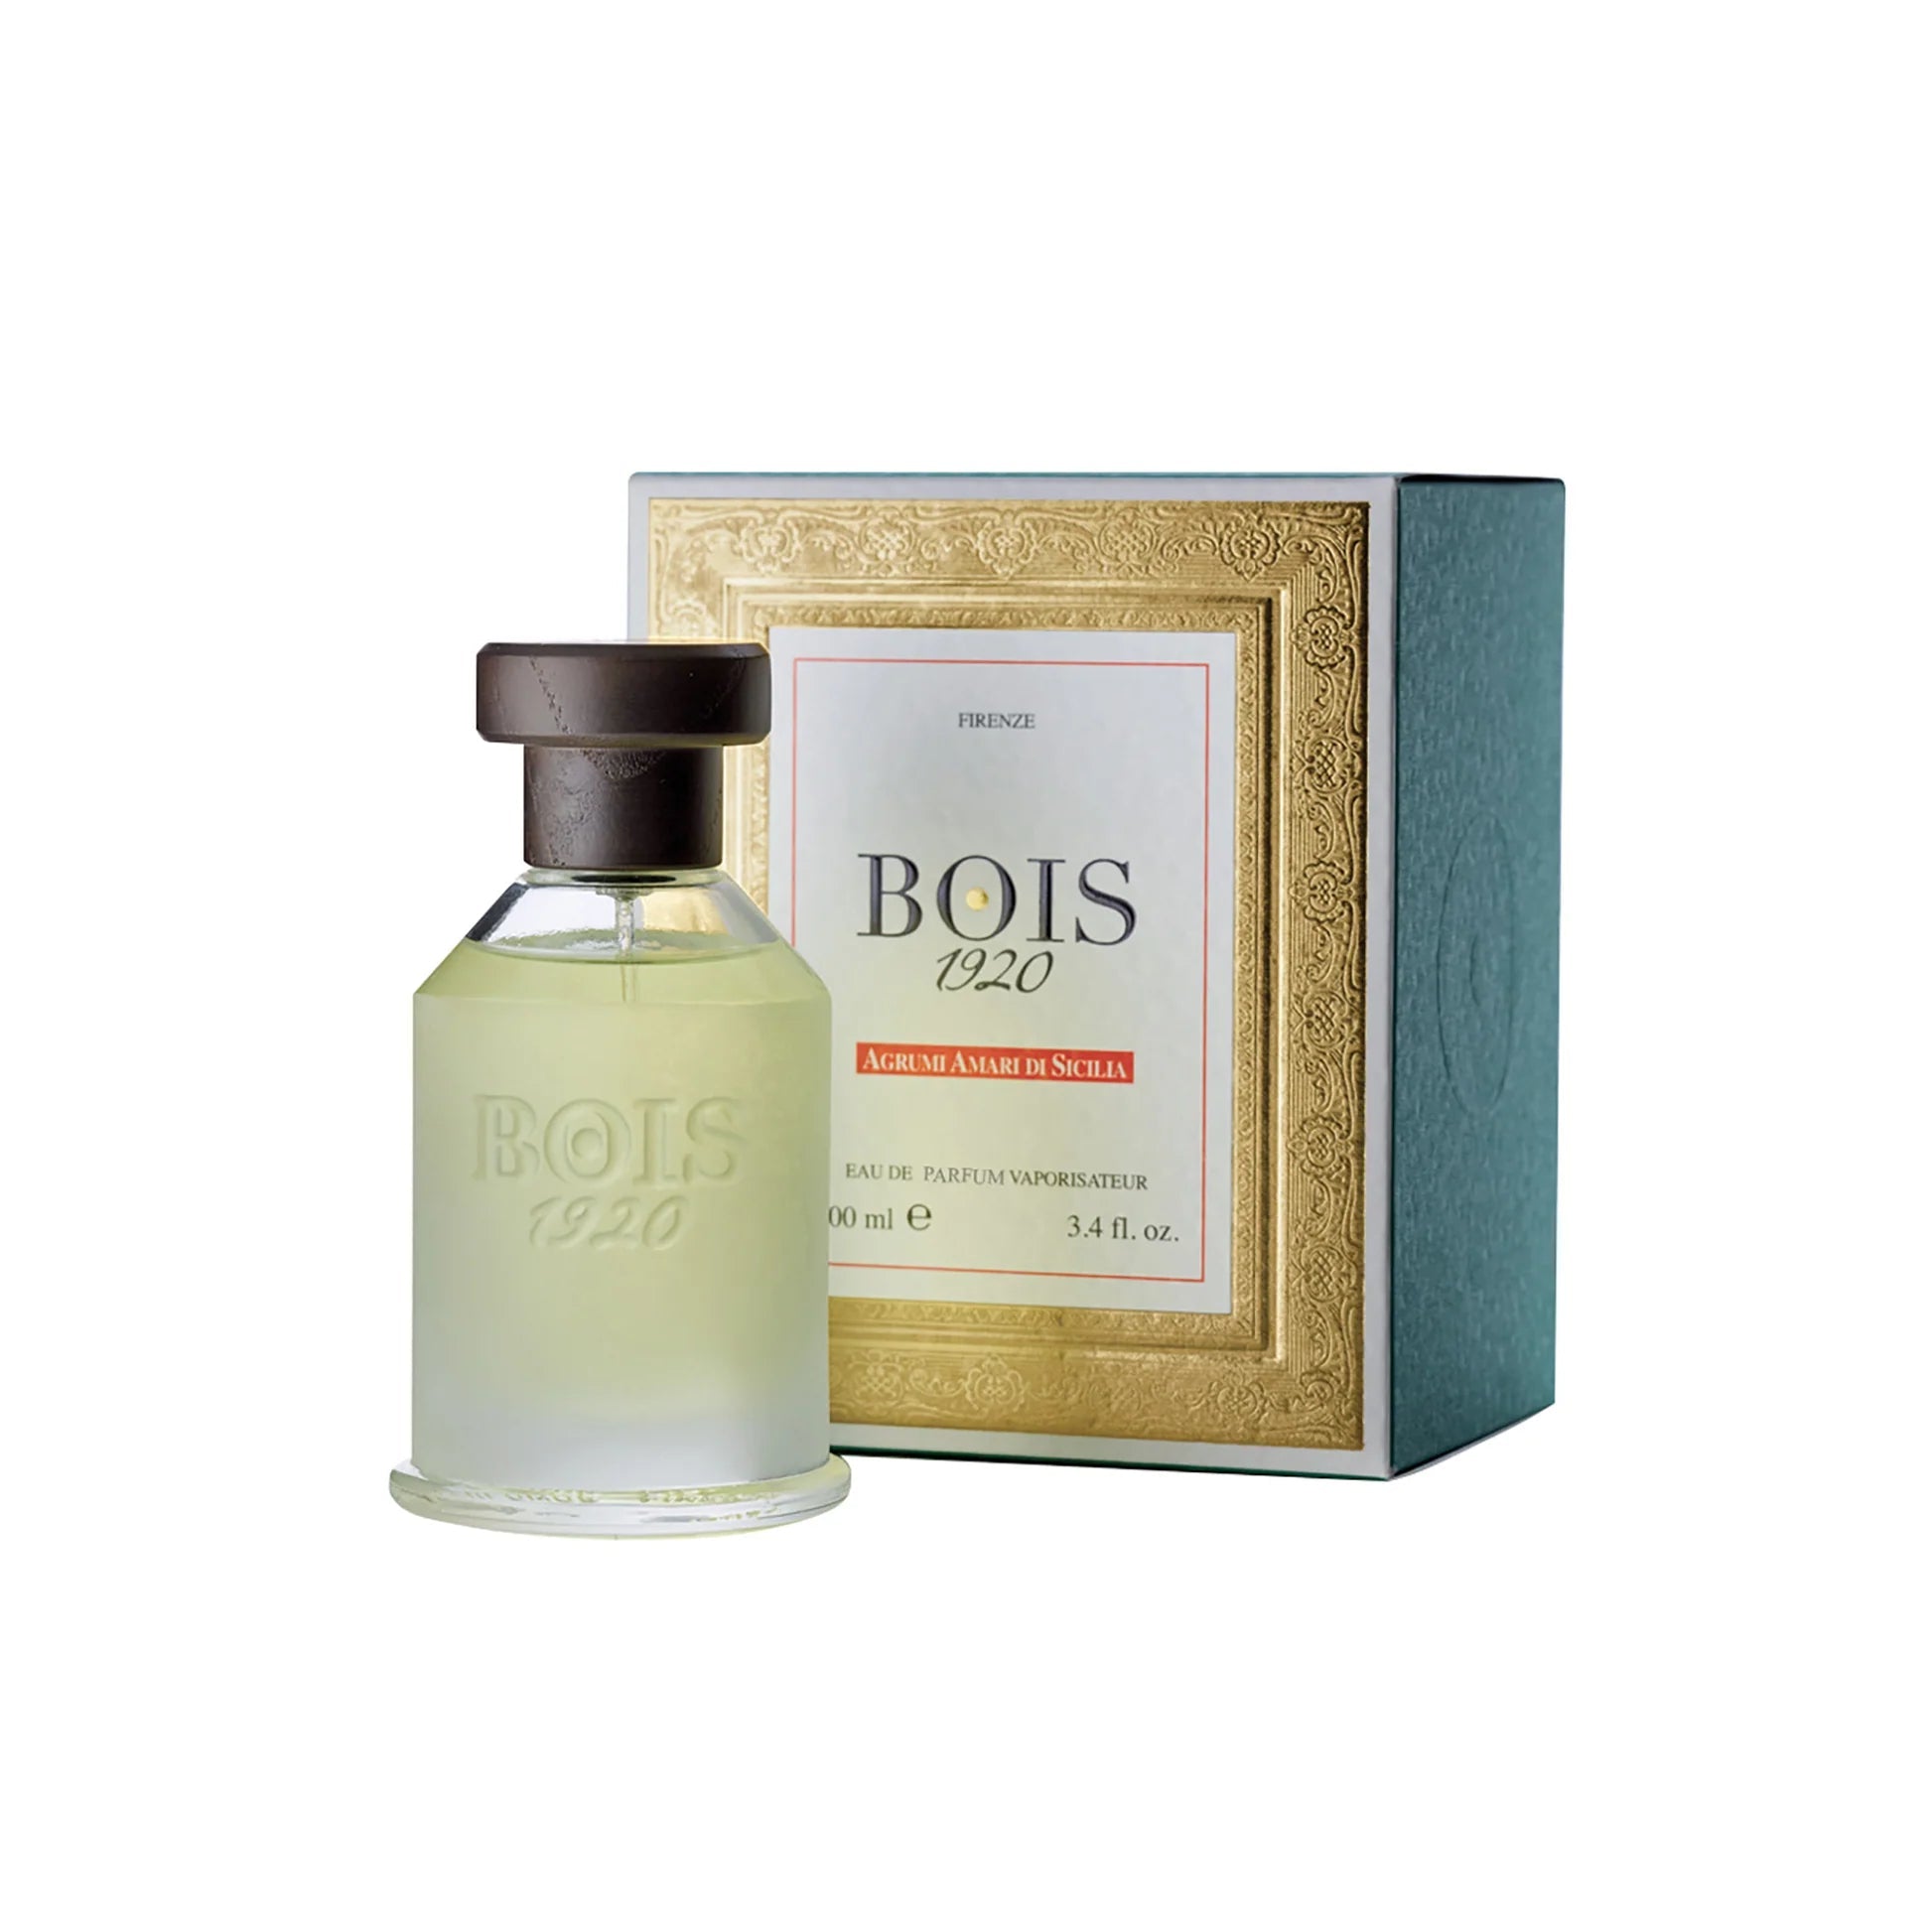 Bois 1920 Agrumi Amari Di Sicilia EDP | My Perfume Shop Australia